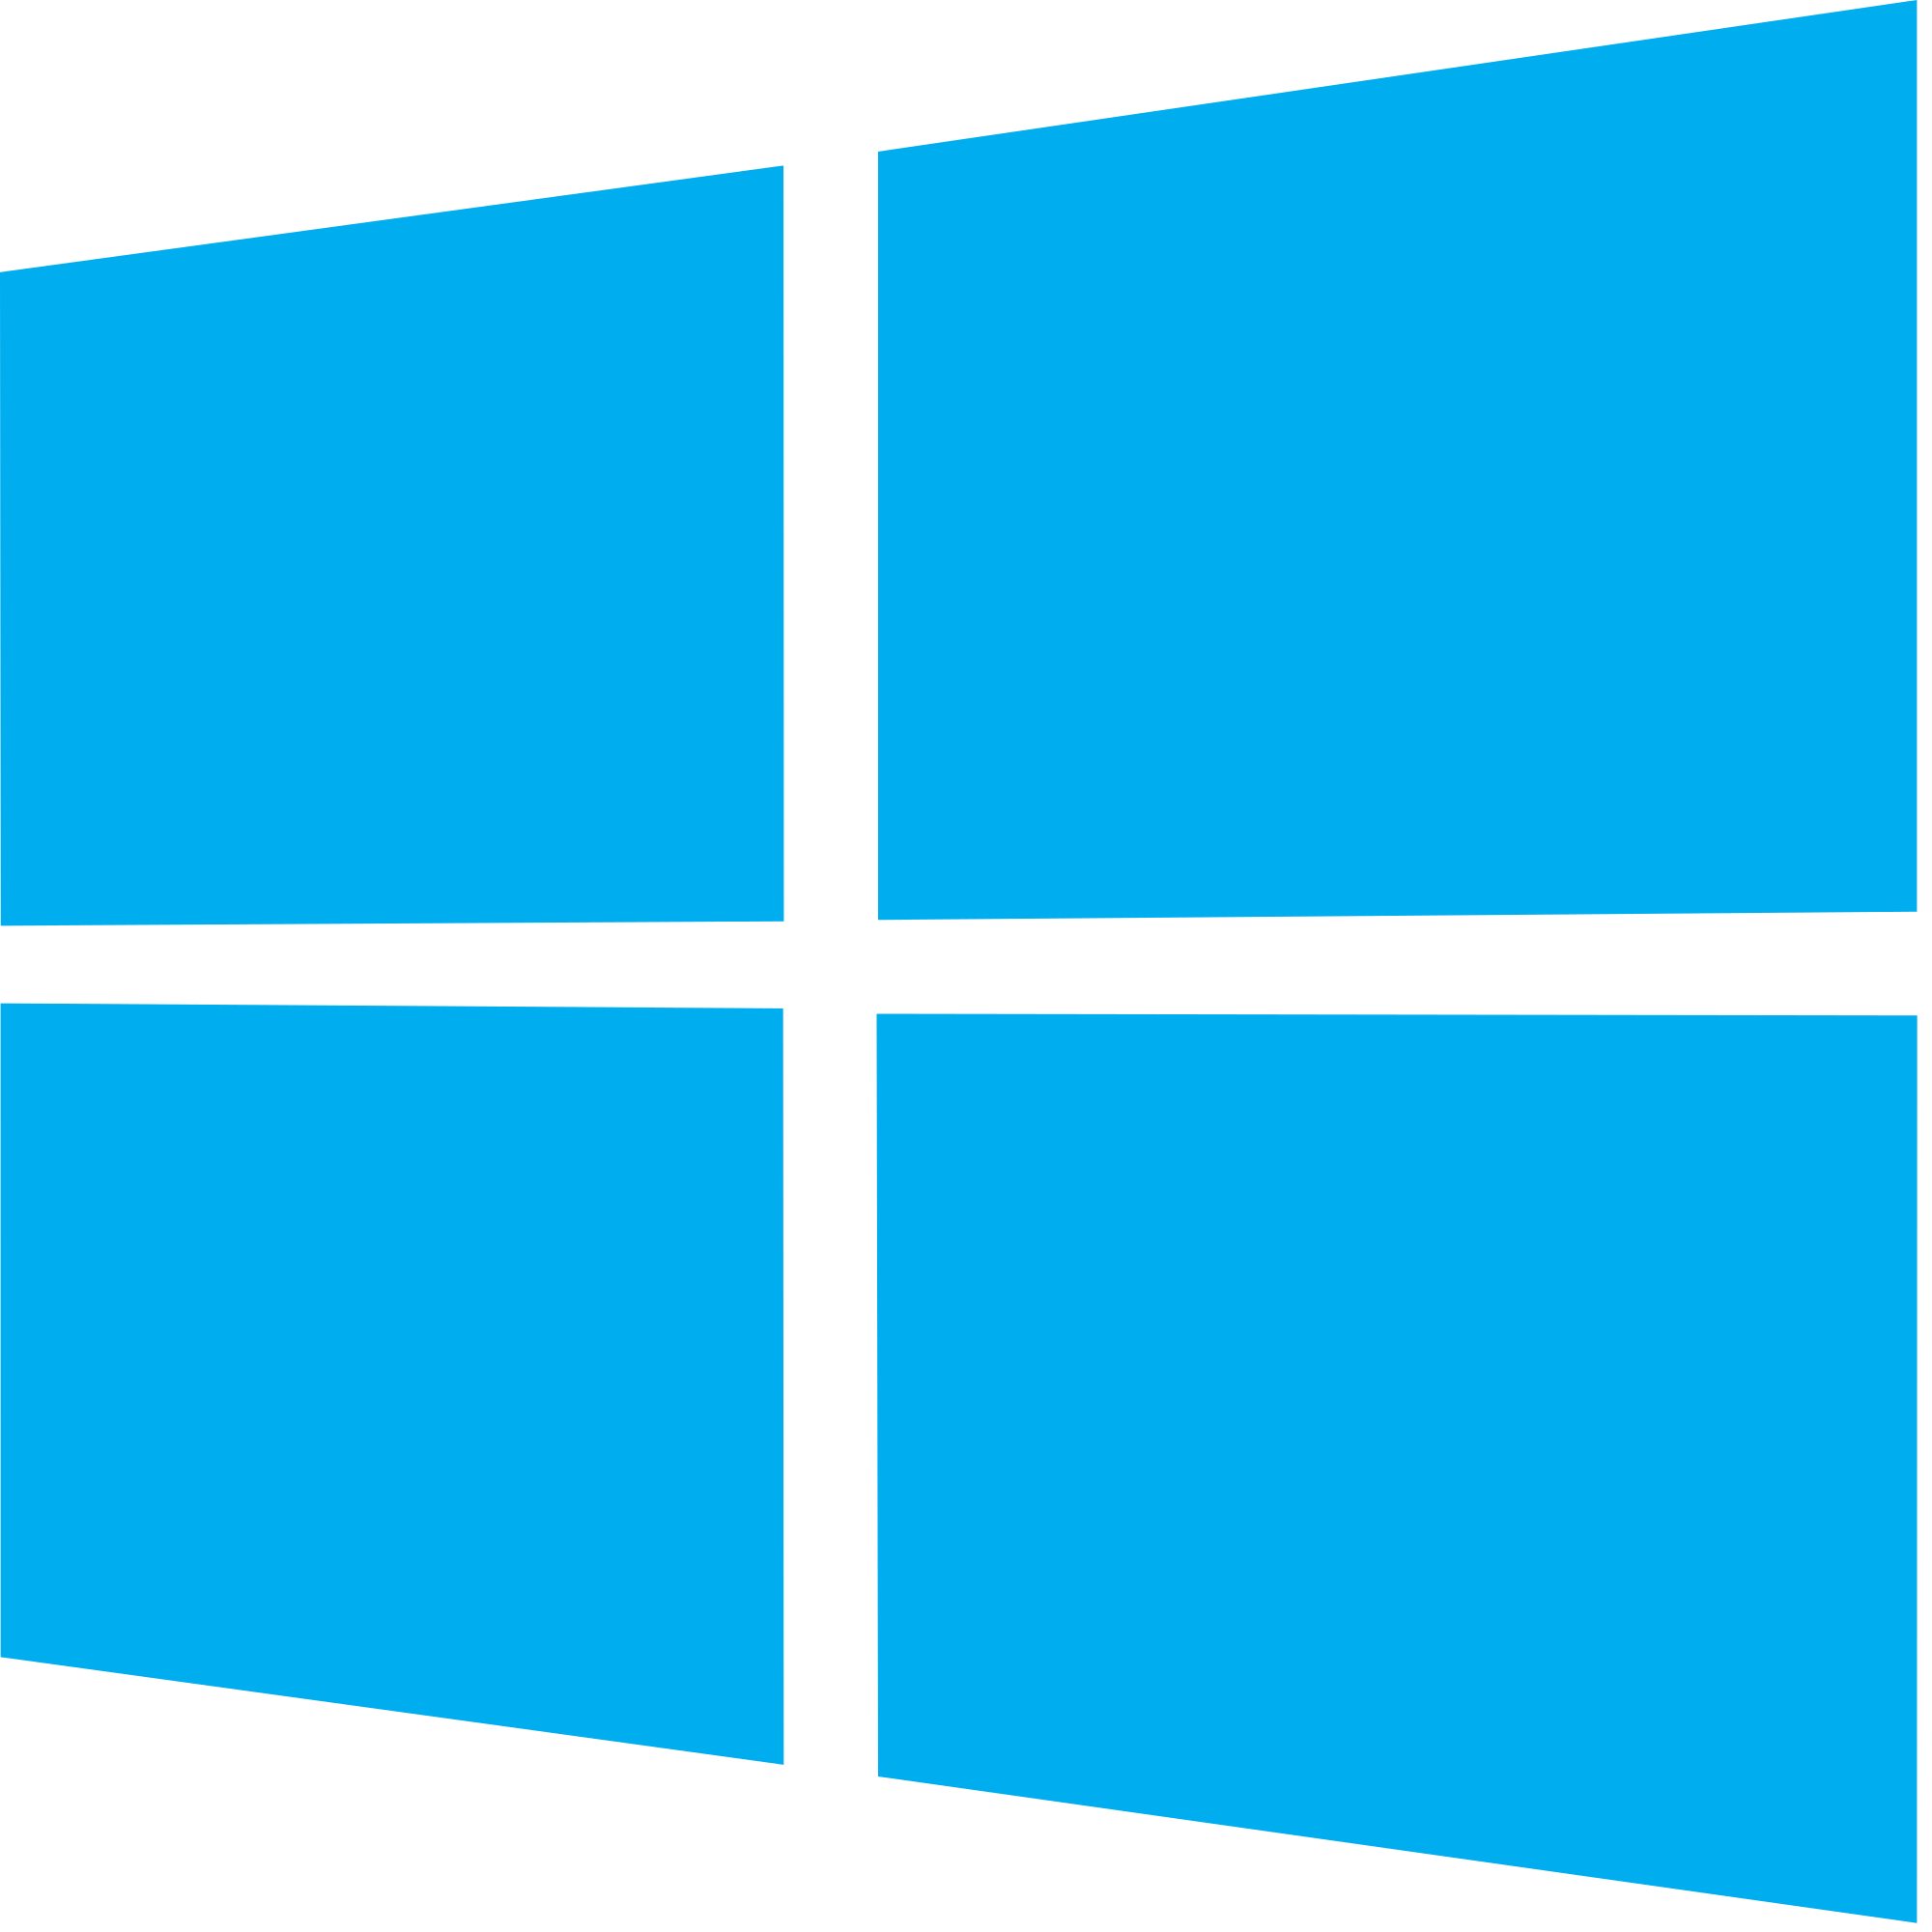 Install Windows 1111.11 without a Product Key (Skip Key Input)